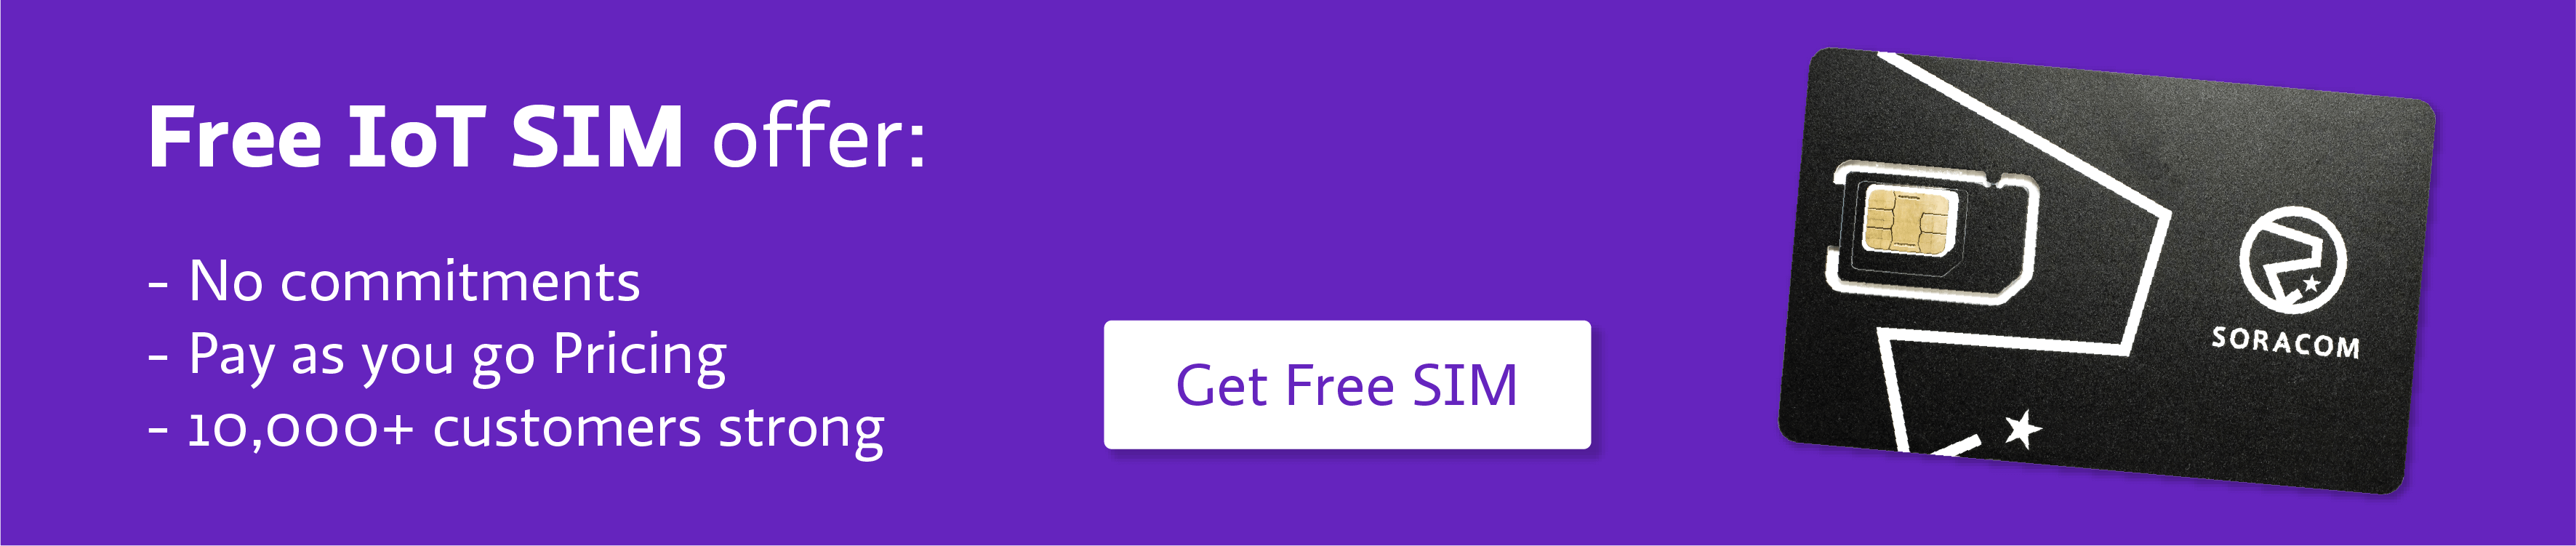 Free SIM offer